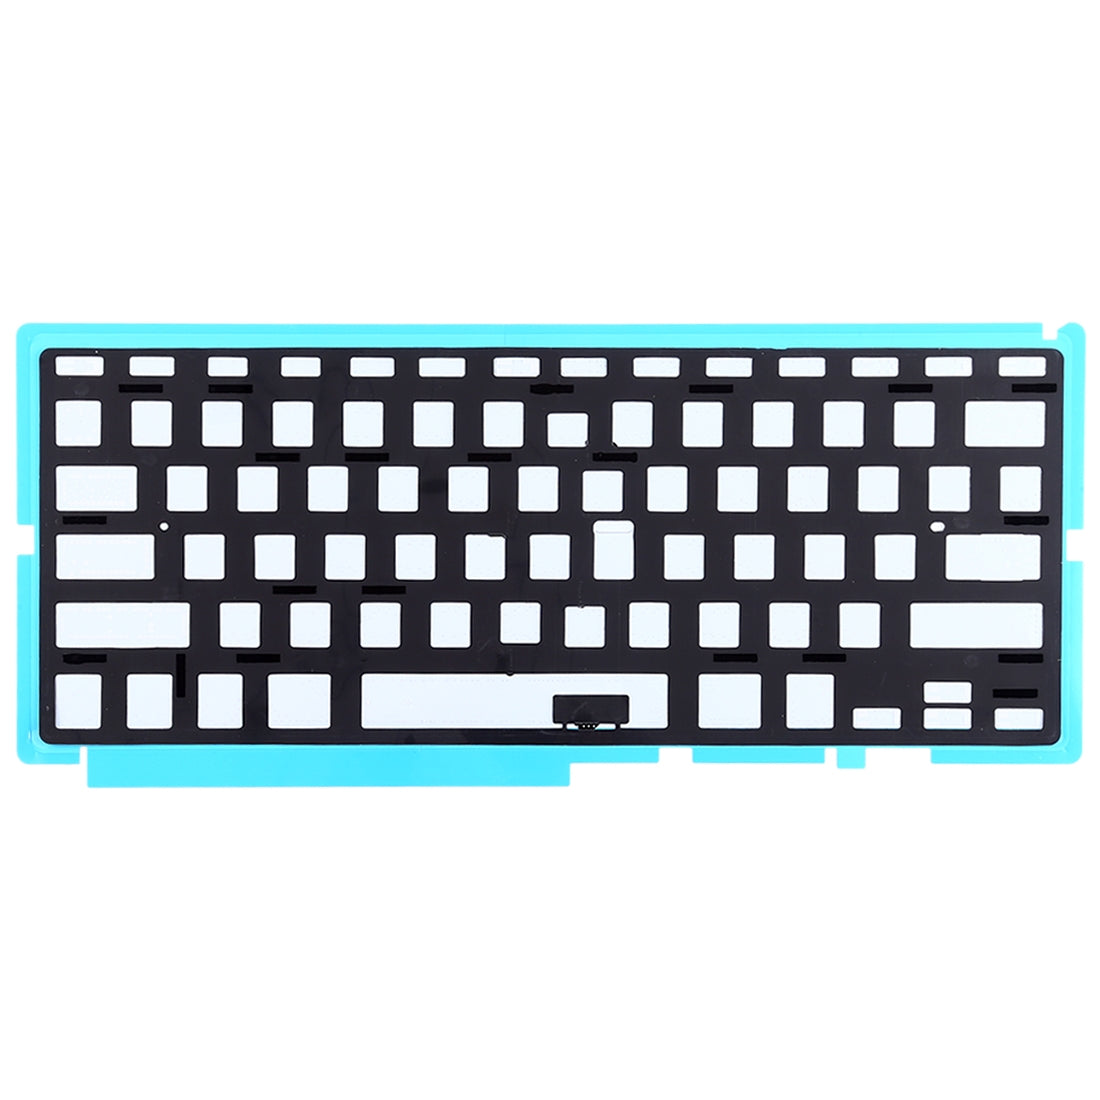 Backlight Keyboard US Version without ñ Apple MacBook Pro 15.4 A1286